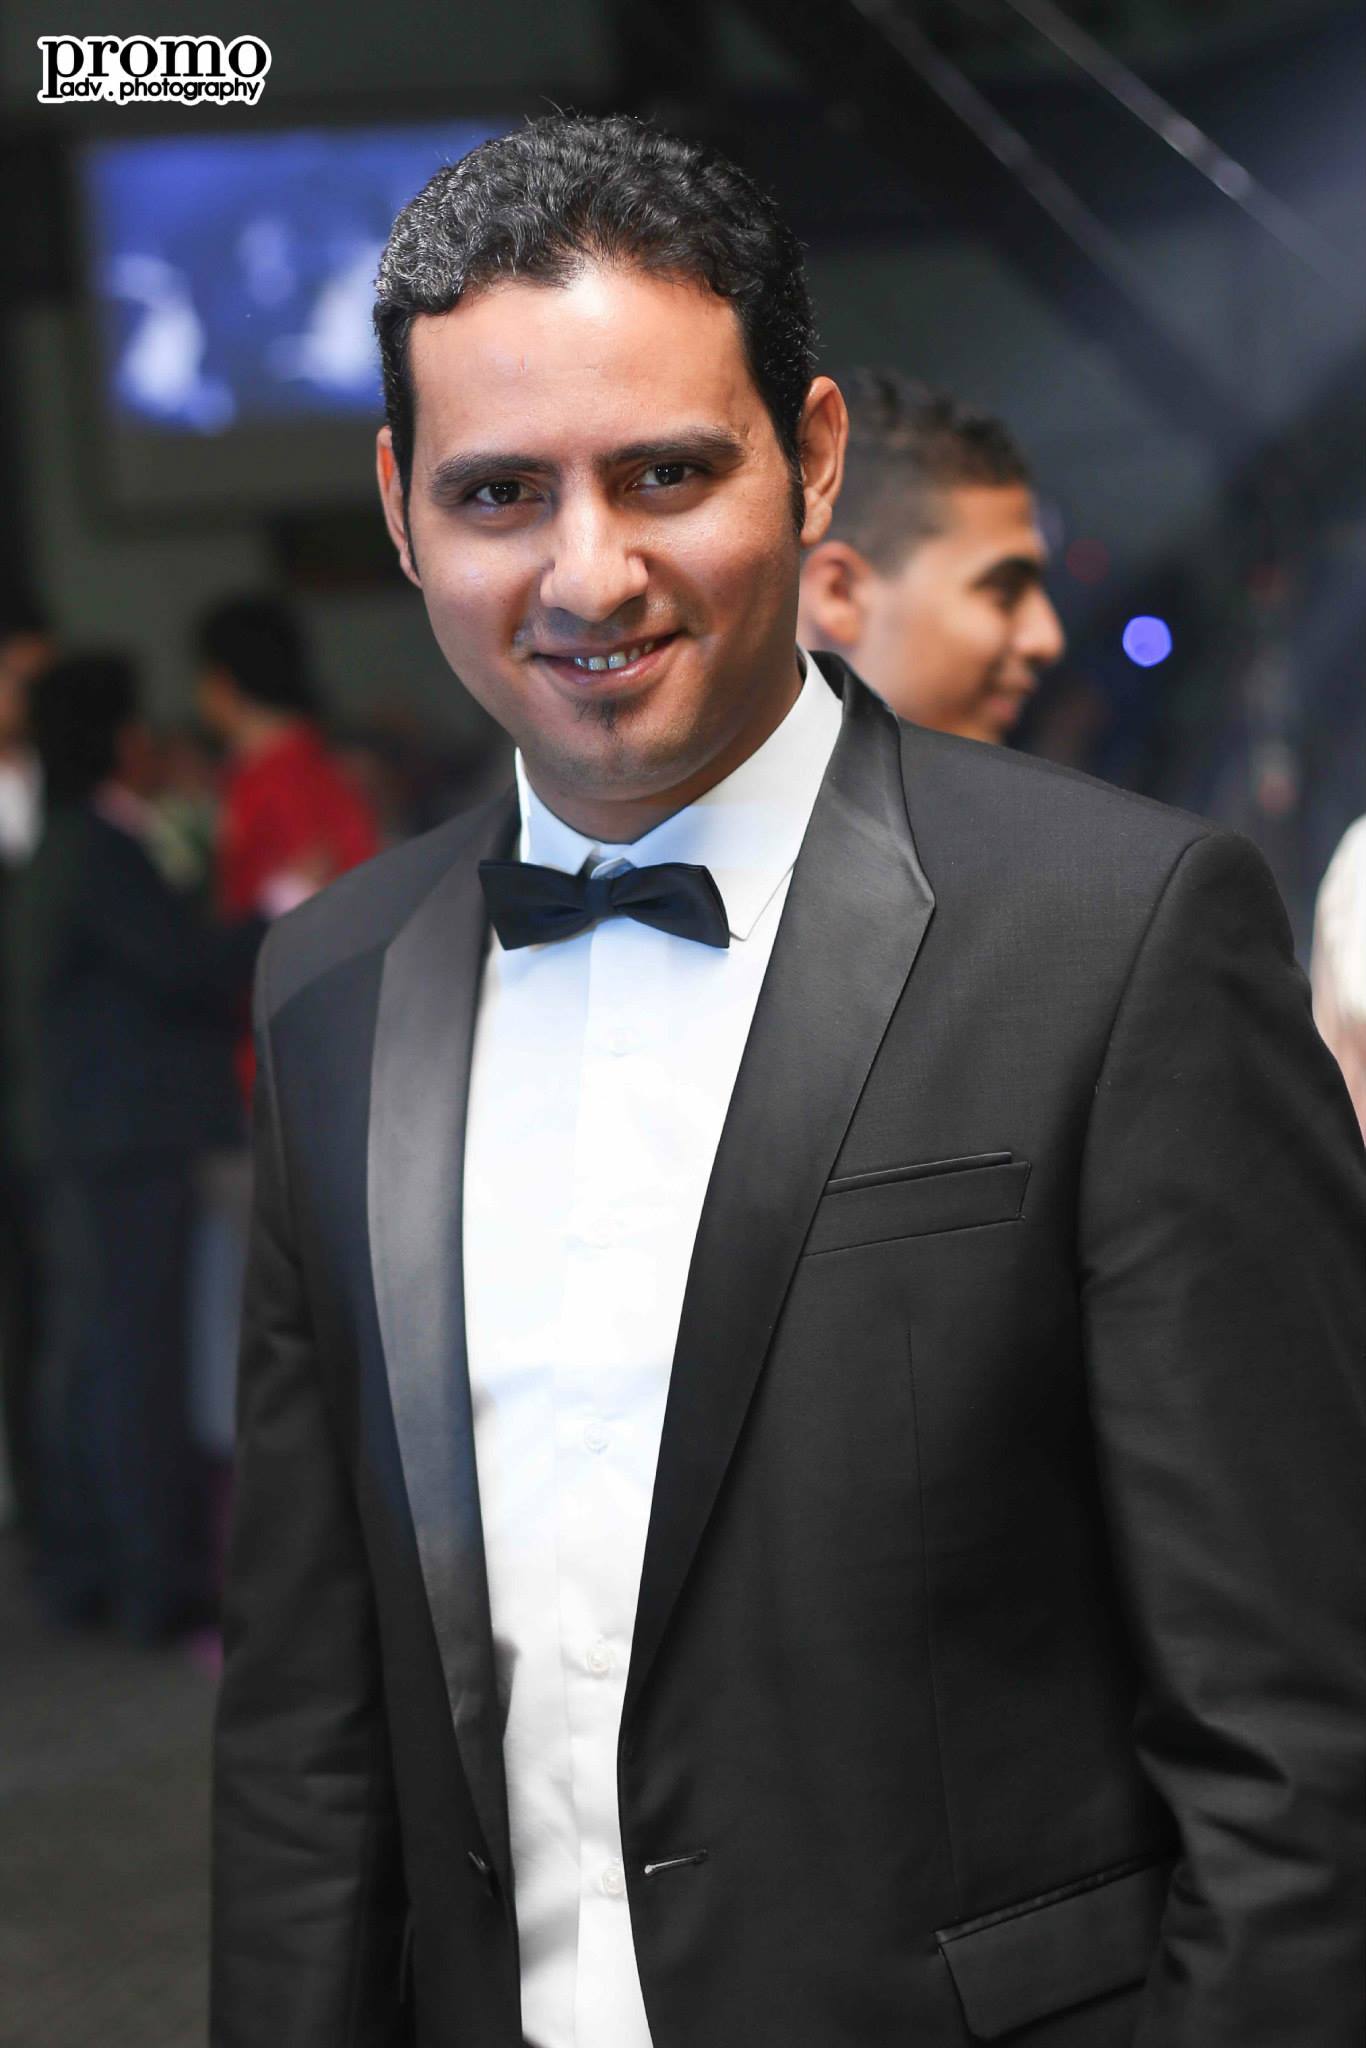 Ayman Zakaria